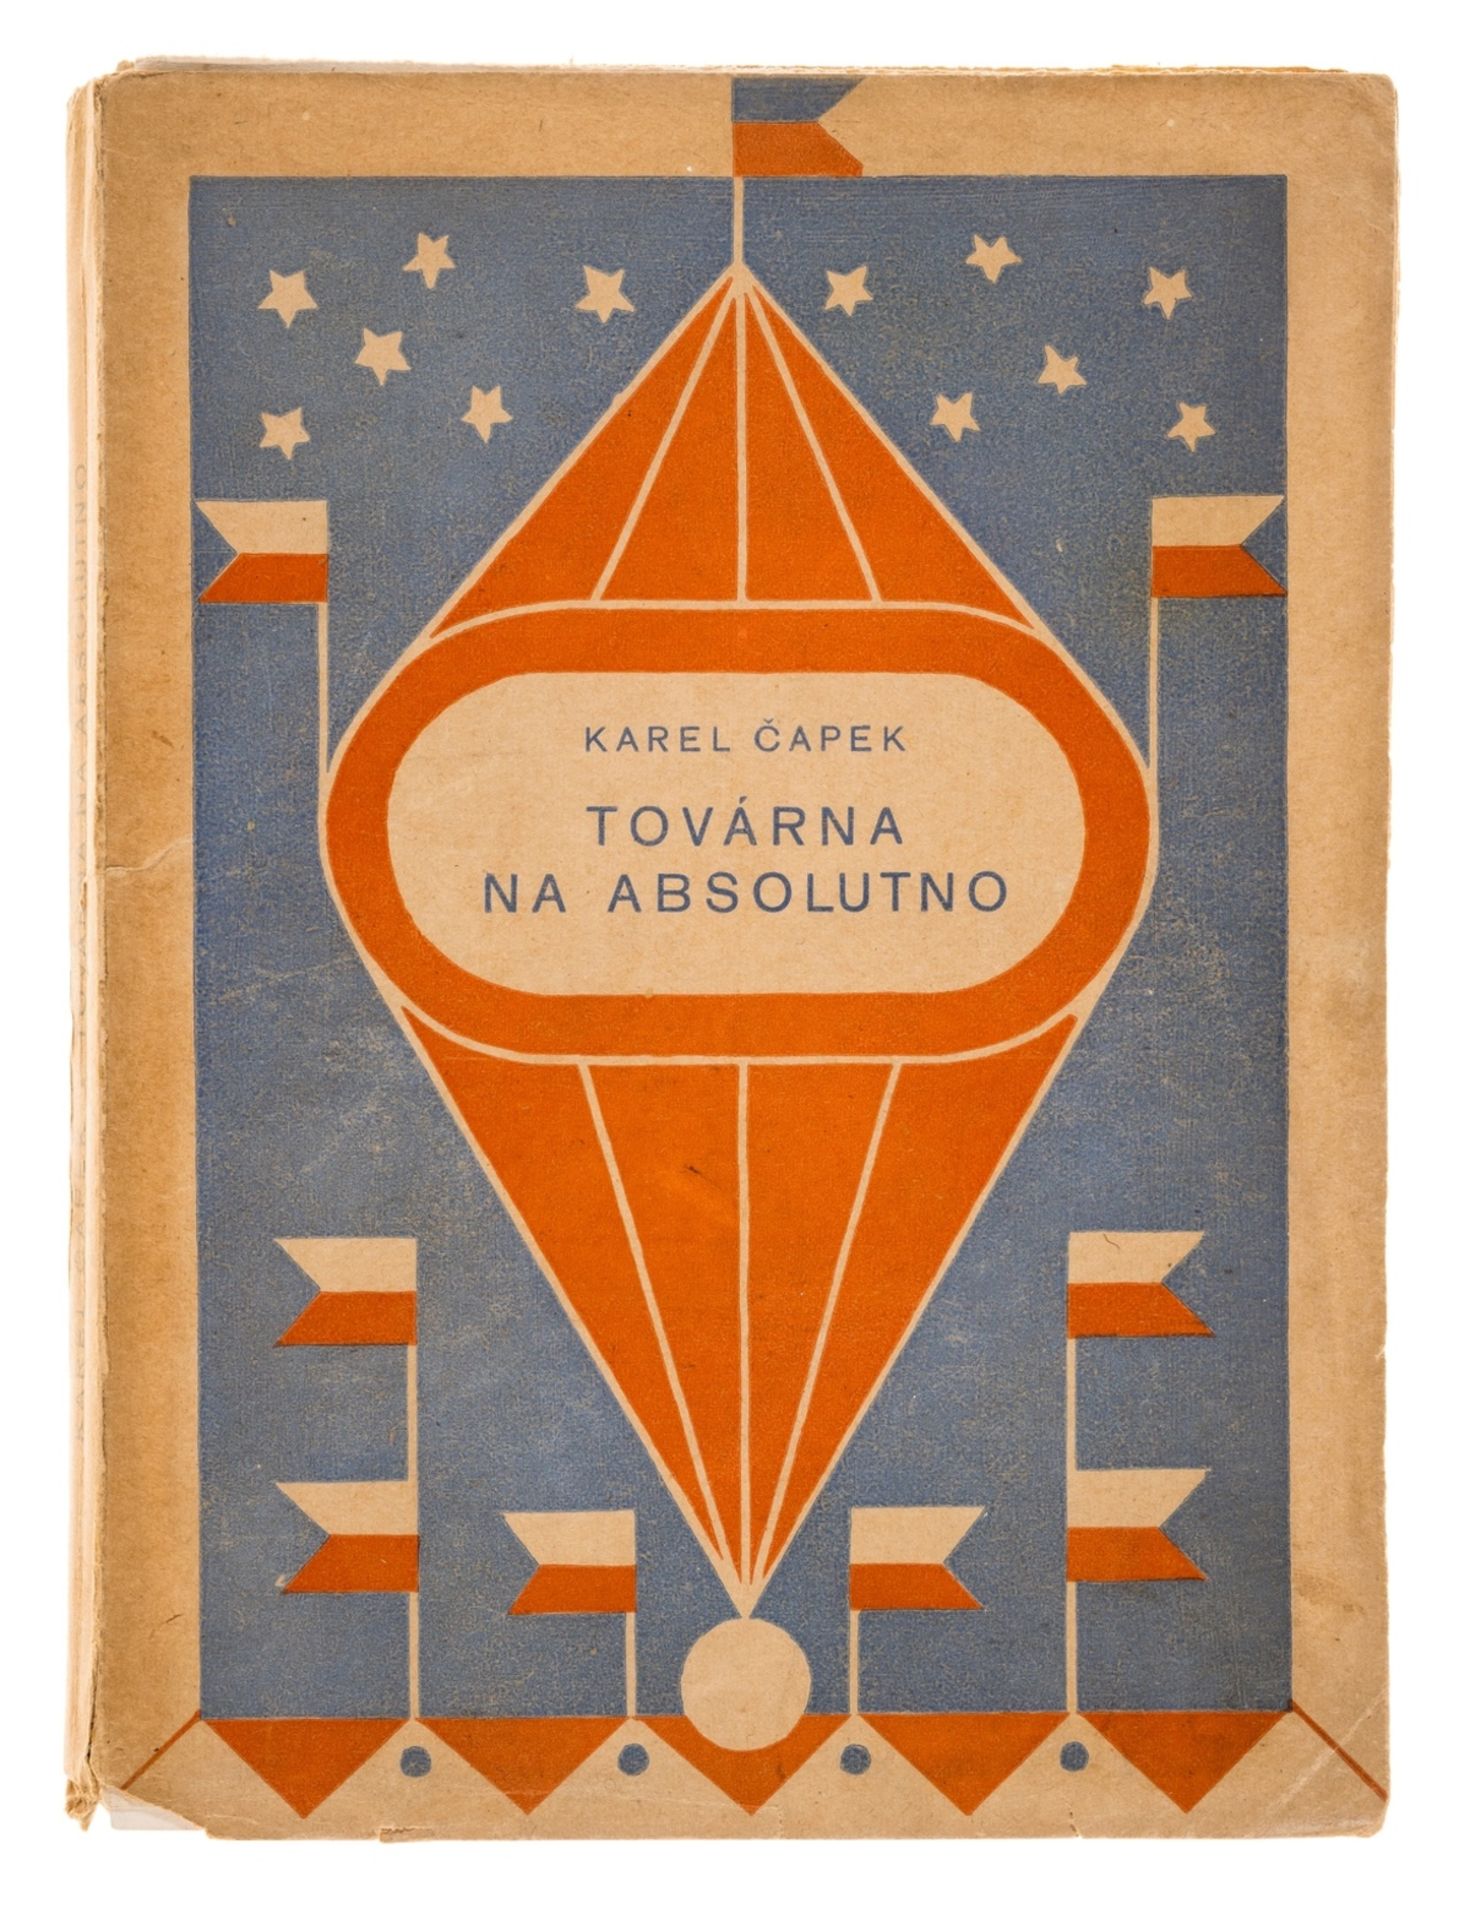 Čapek (Karel) Továrna na absolutno [The Absolute at Large], first edition, Brno, Polygrafie, 1922.